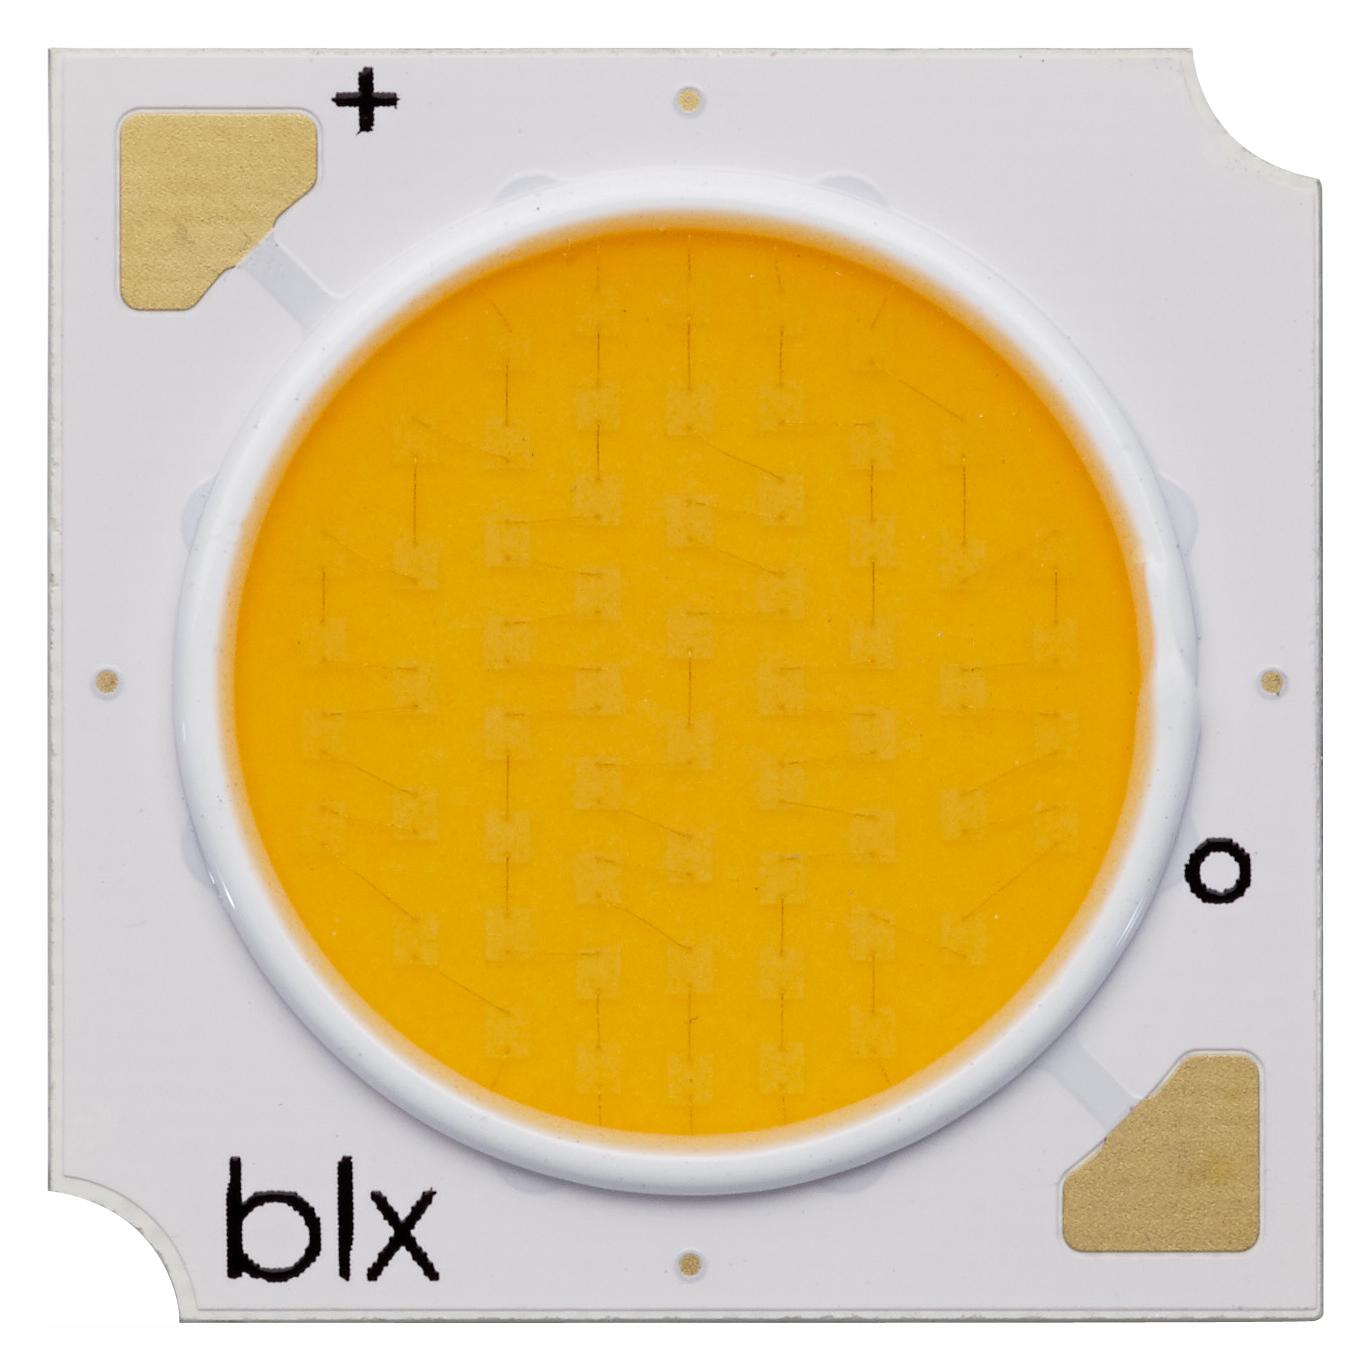 BXRE-57S2001-C-73 COB LED, COOL WHITE, 130LM/W, 5700K BRIDGELUX